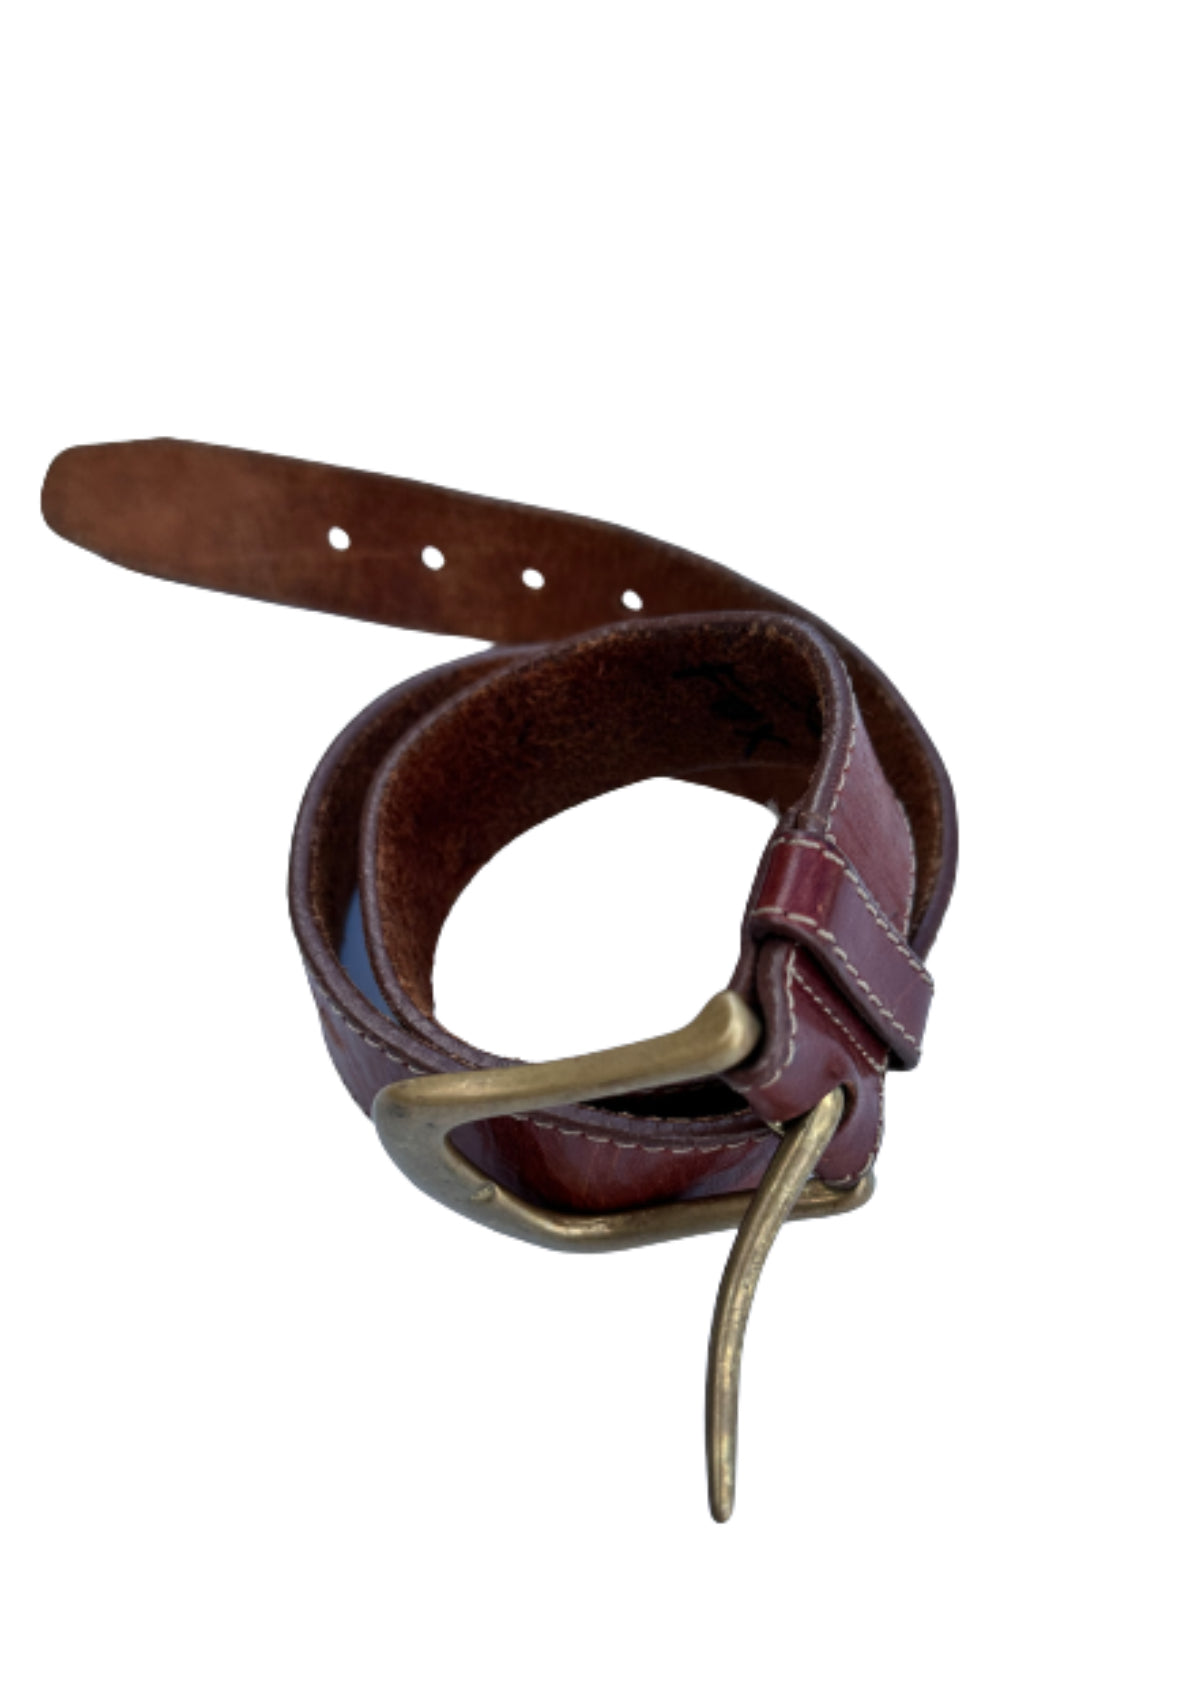 NEW GIRL: Nick Miller's Brown Leather Belt